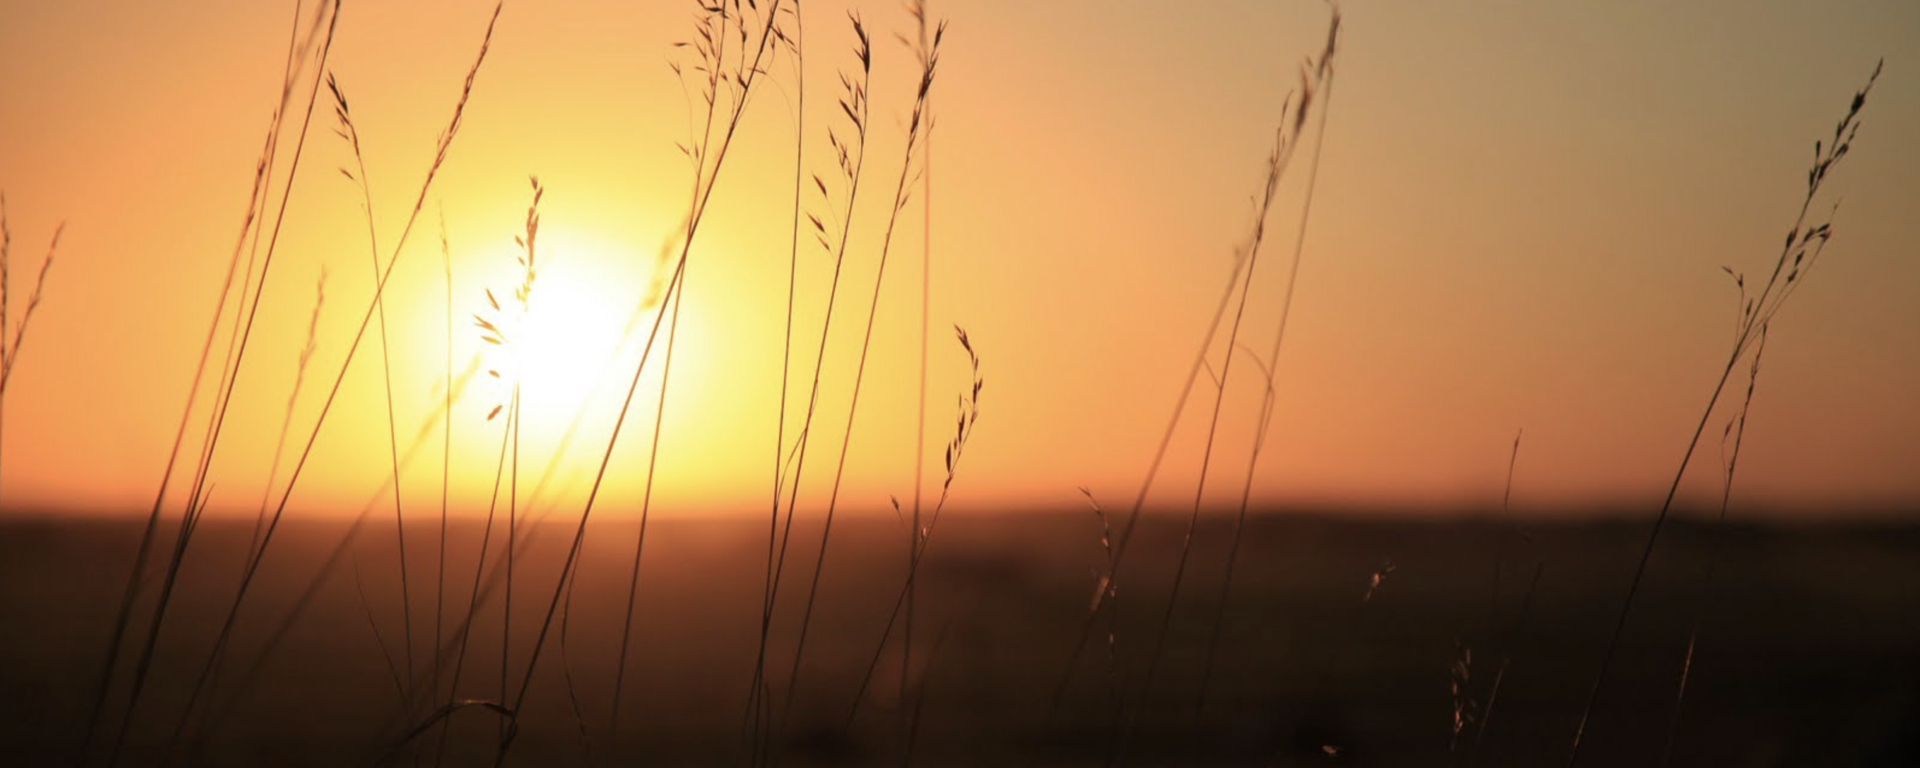 Prairie grass at sunset 